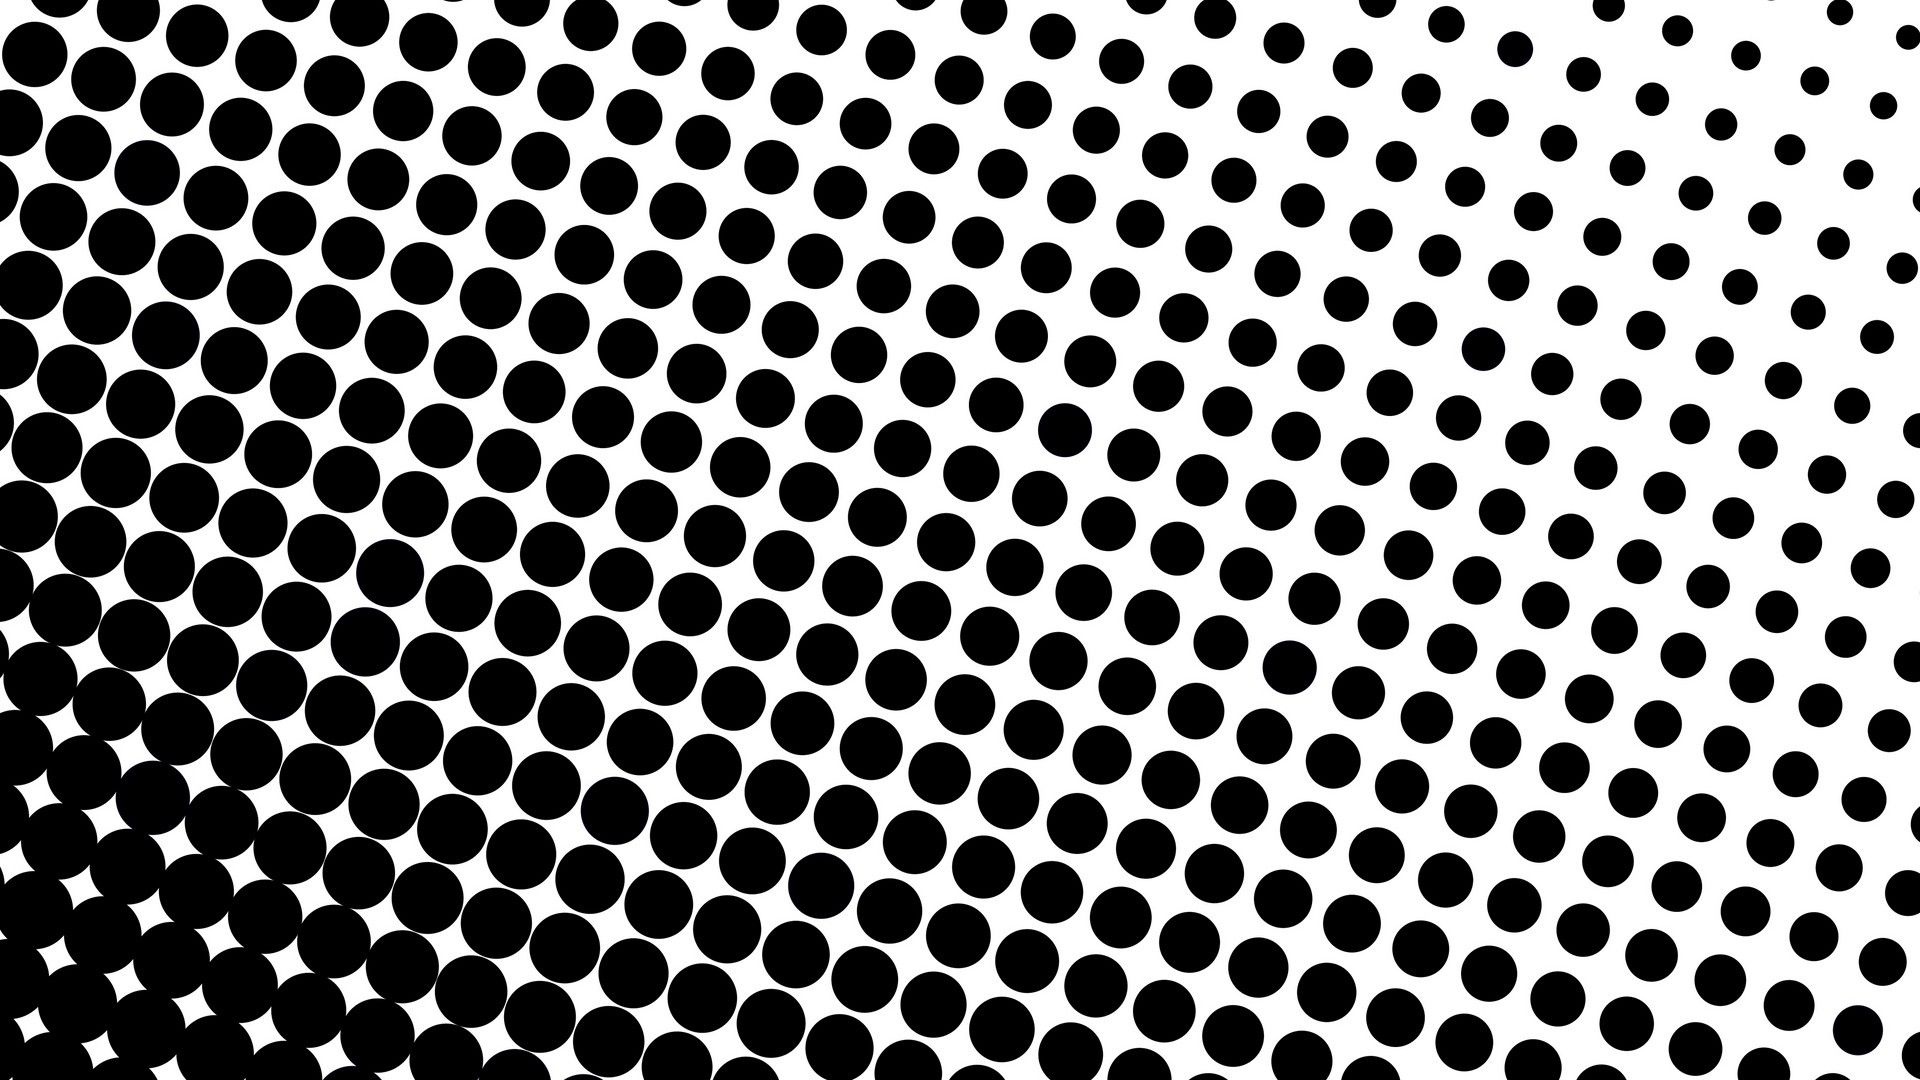 Dots wallpapers, Abstract patterns, Minimalist design, 1920x1080 Full HD Desktop